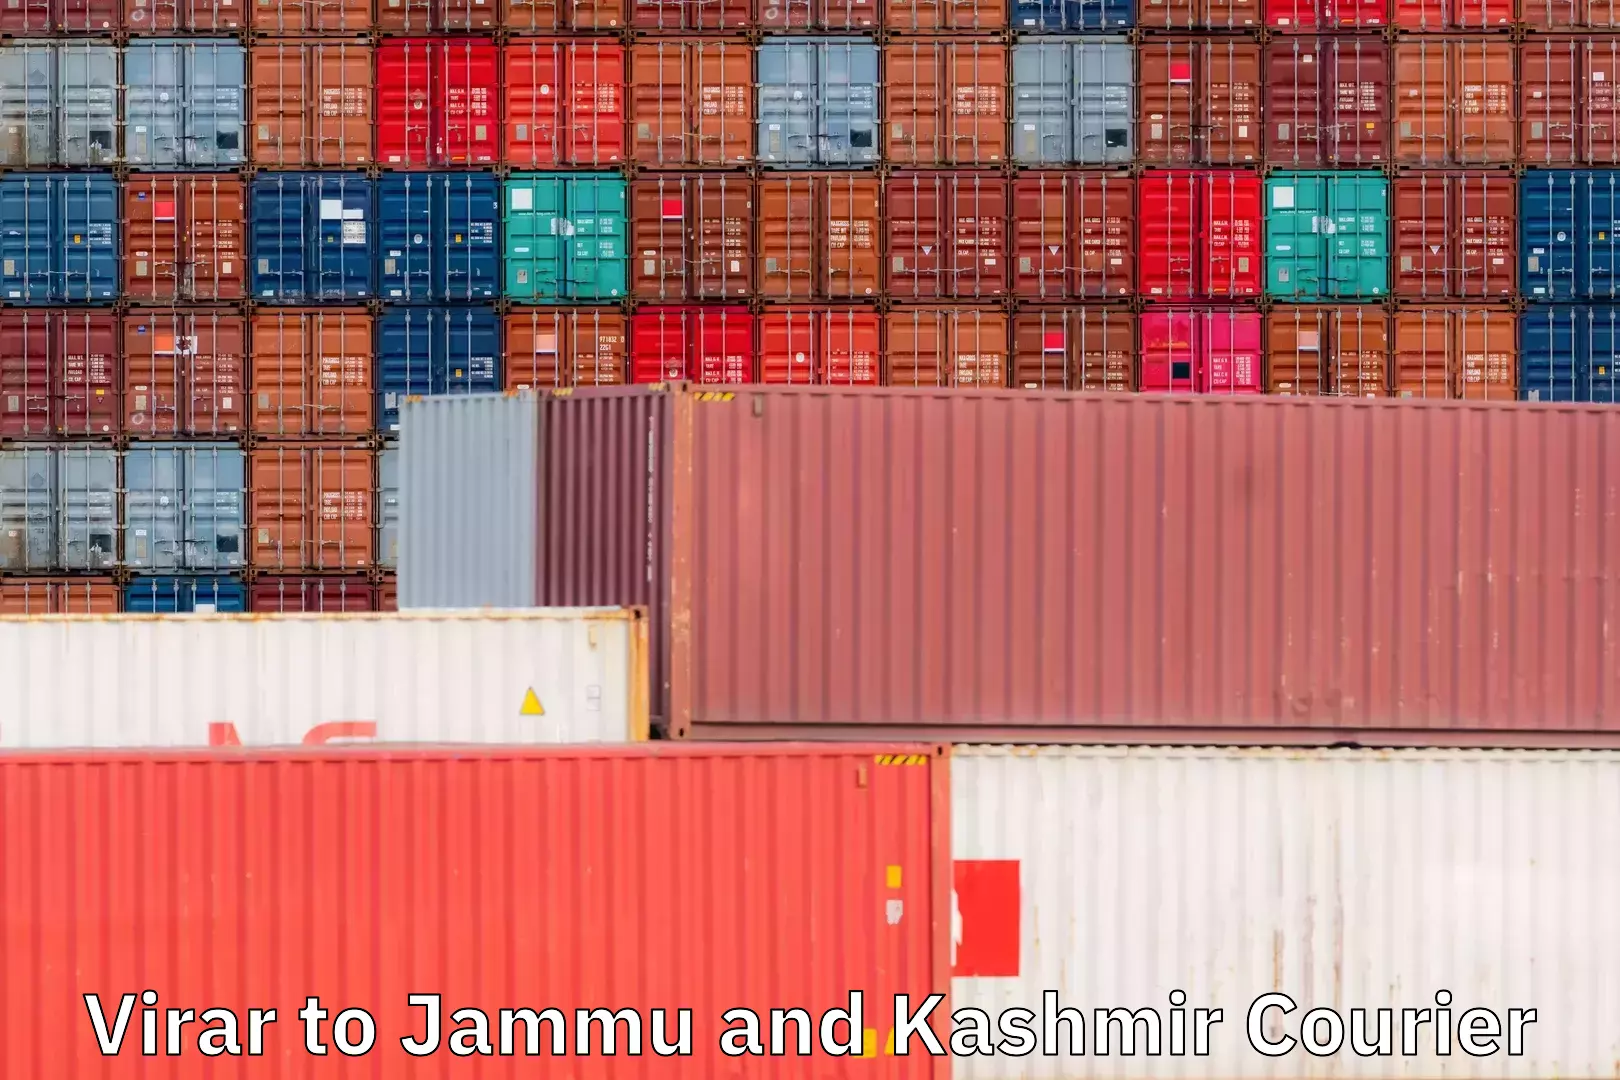 Global shipping networks Virar to Jammu and Kashmir